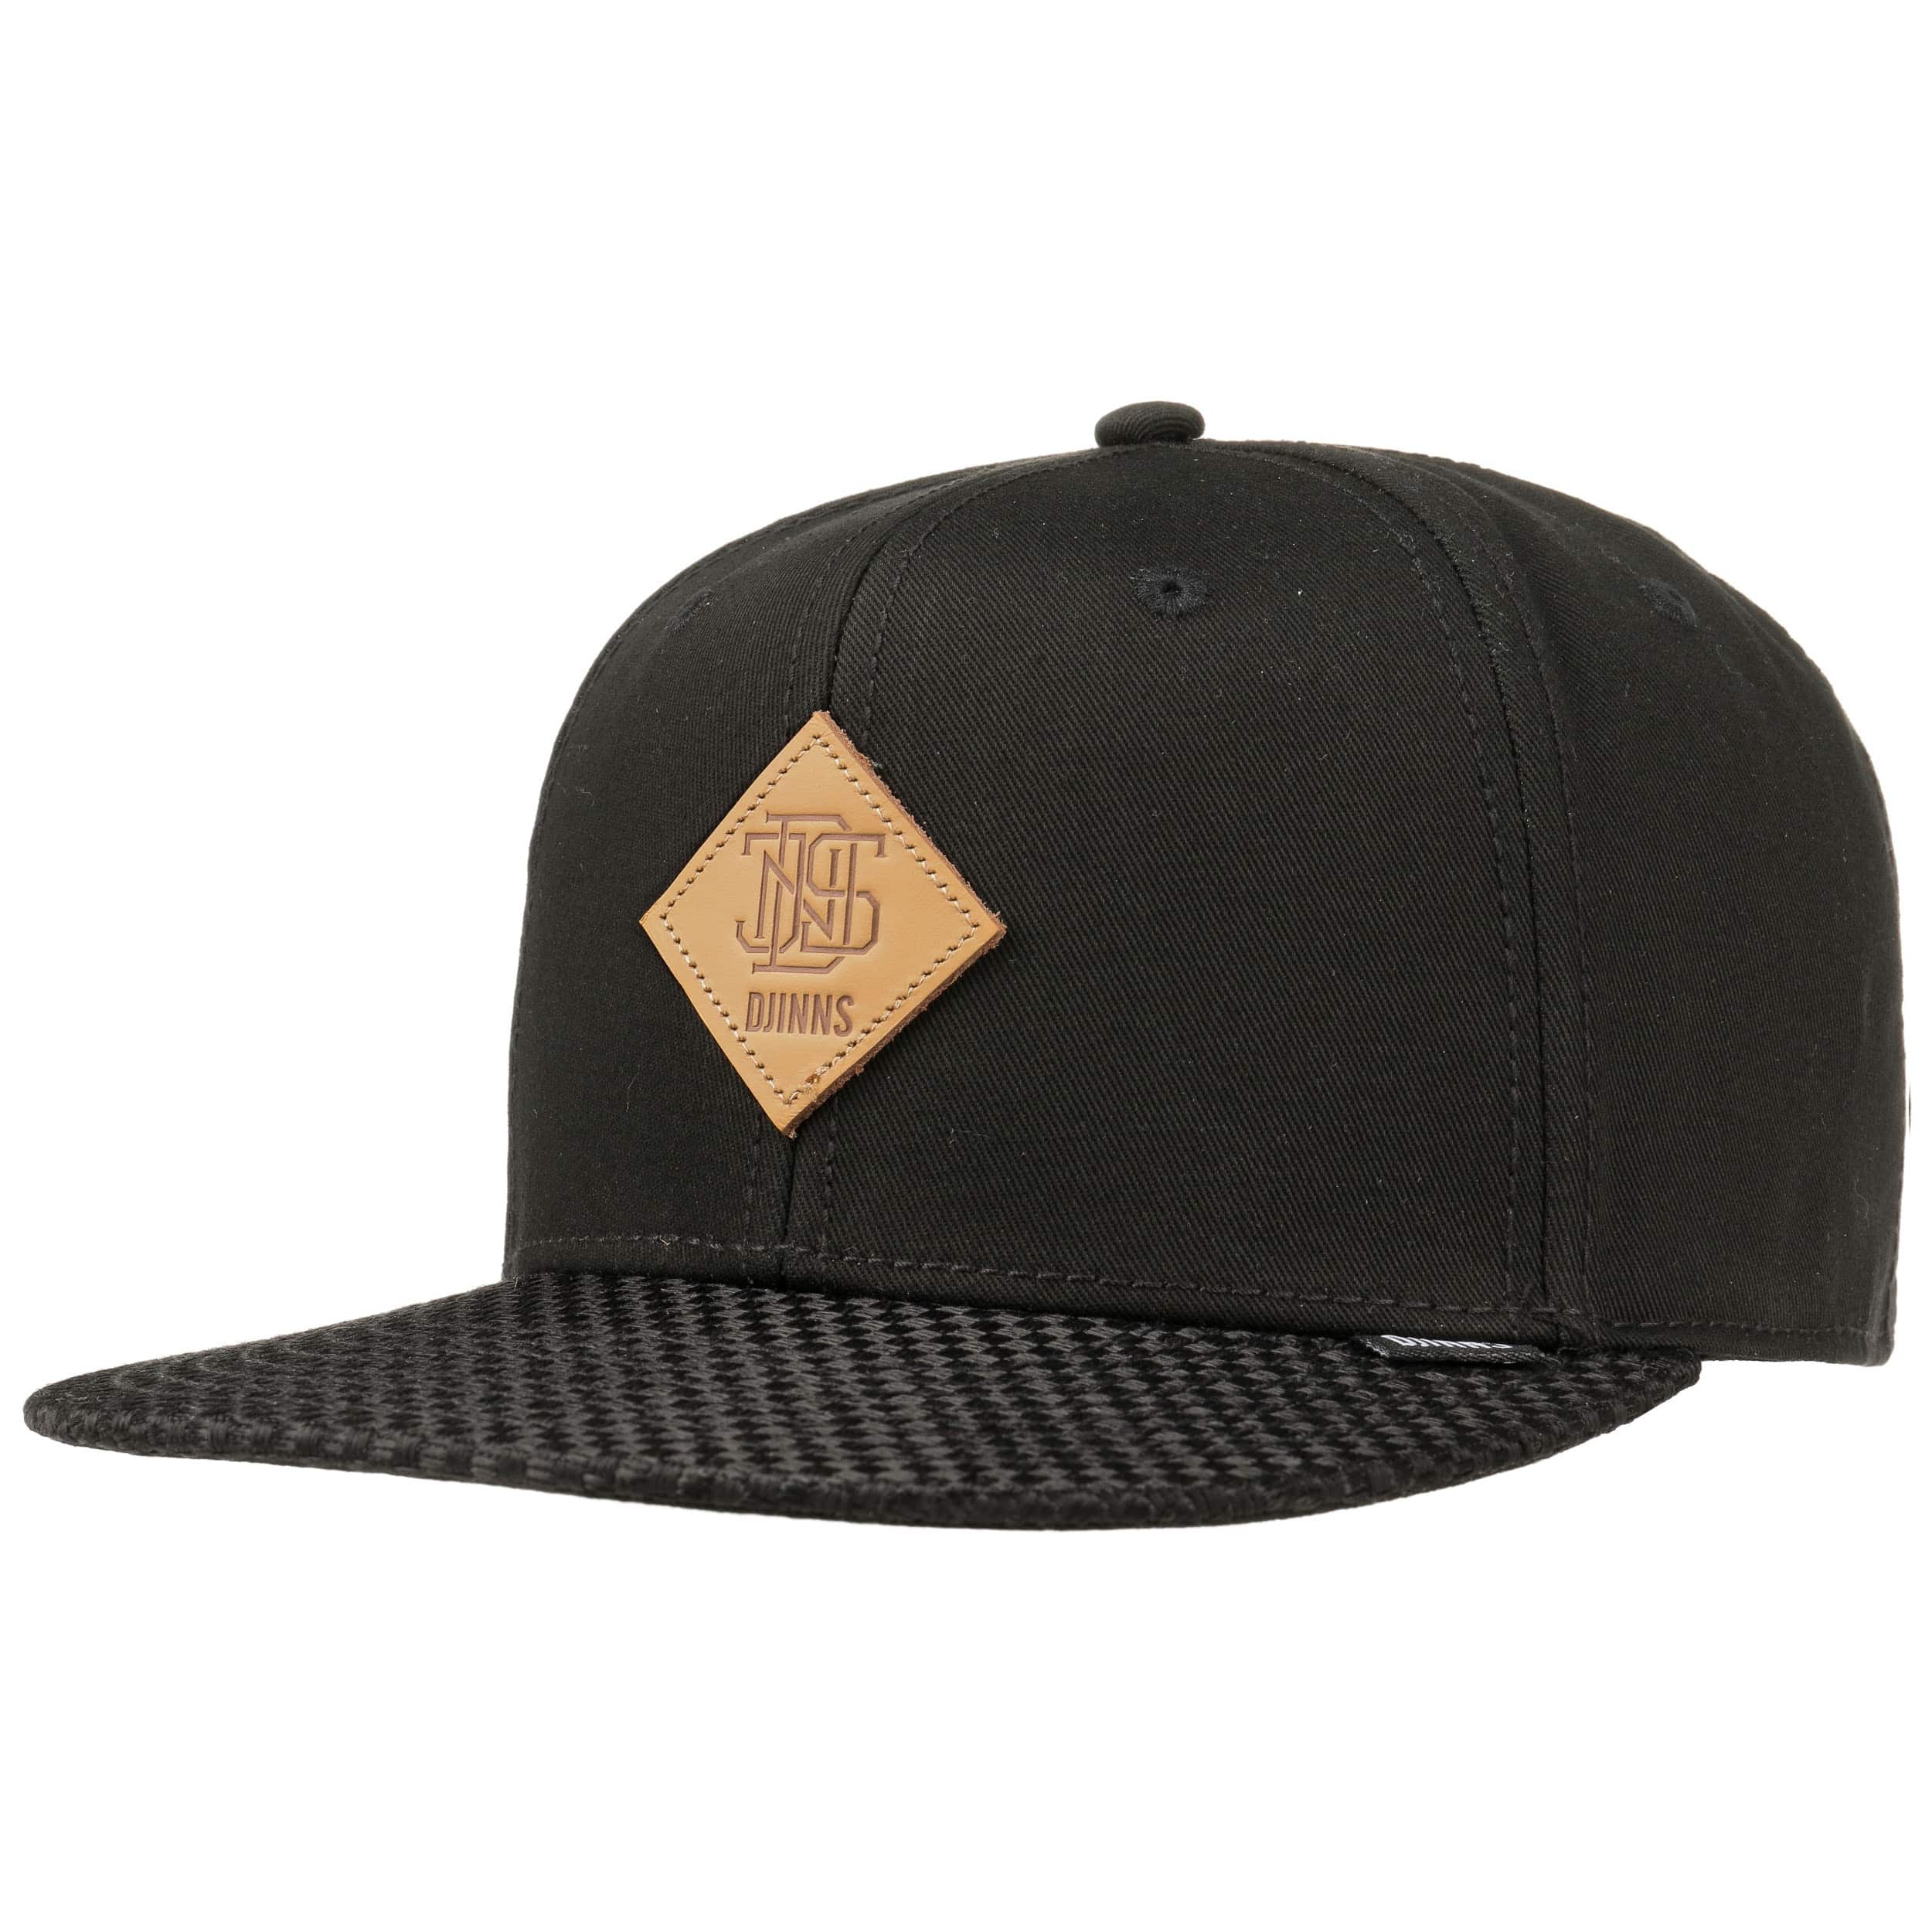 6P Woven Bast Snapback Cap by Djinns, EUR 24,95 --> Hats, caps ...